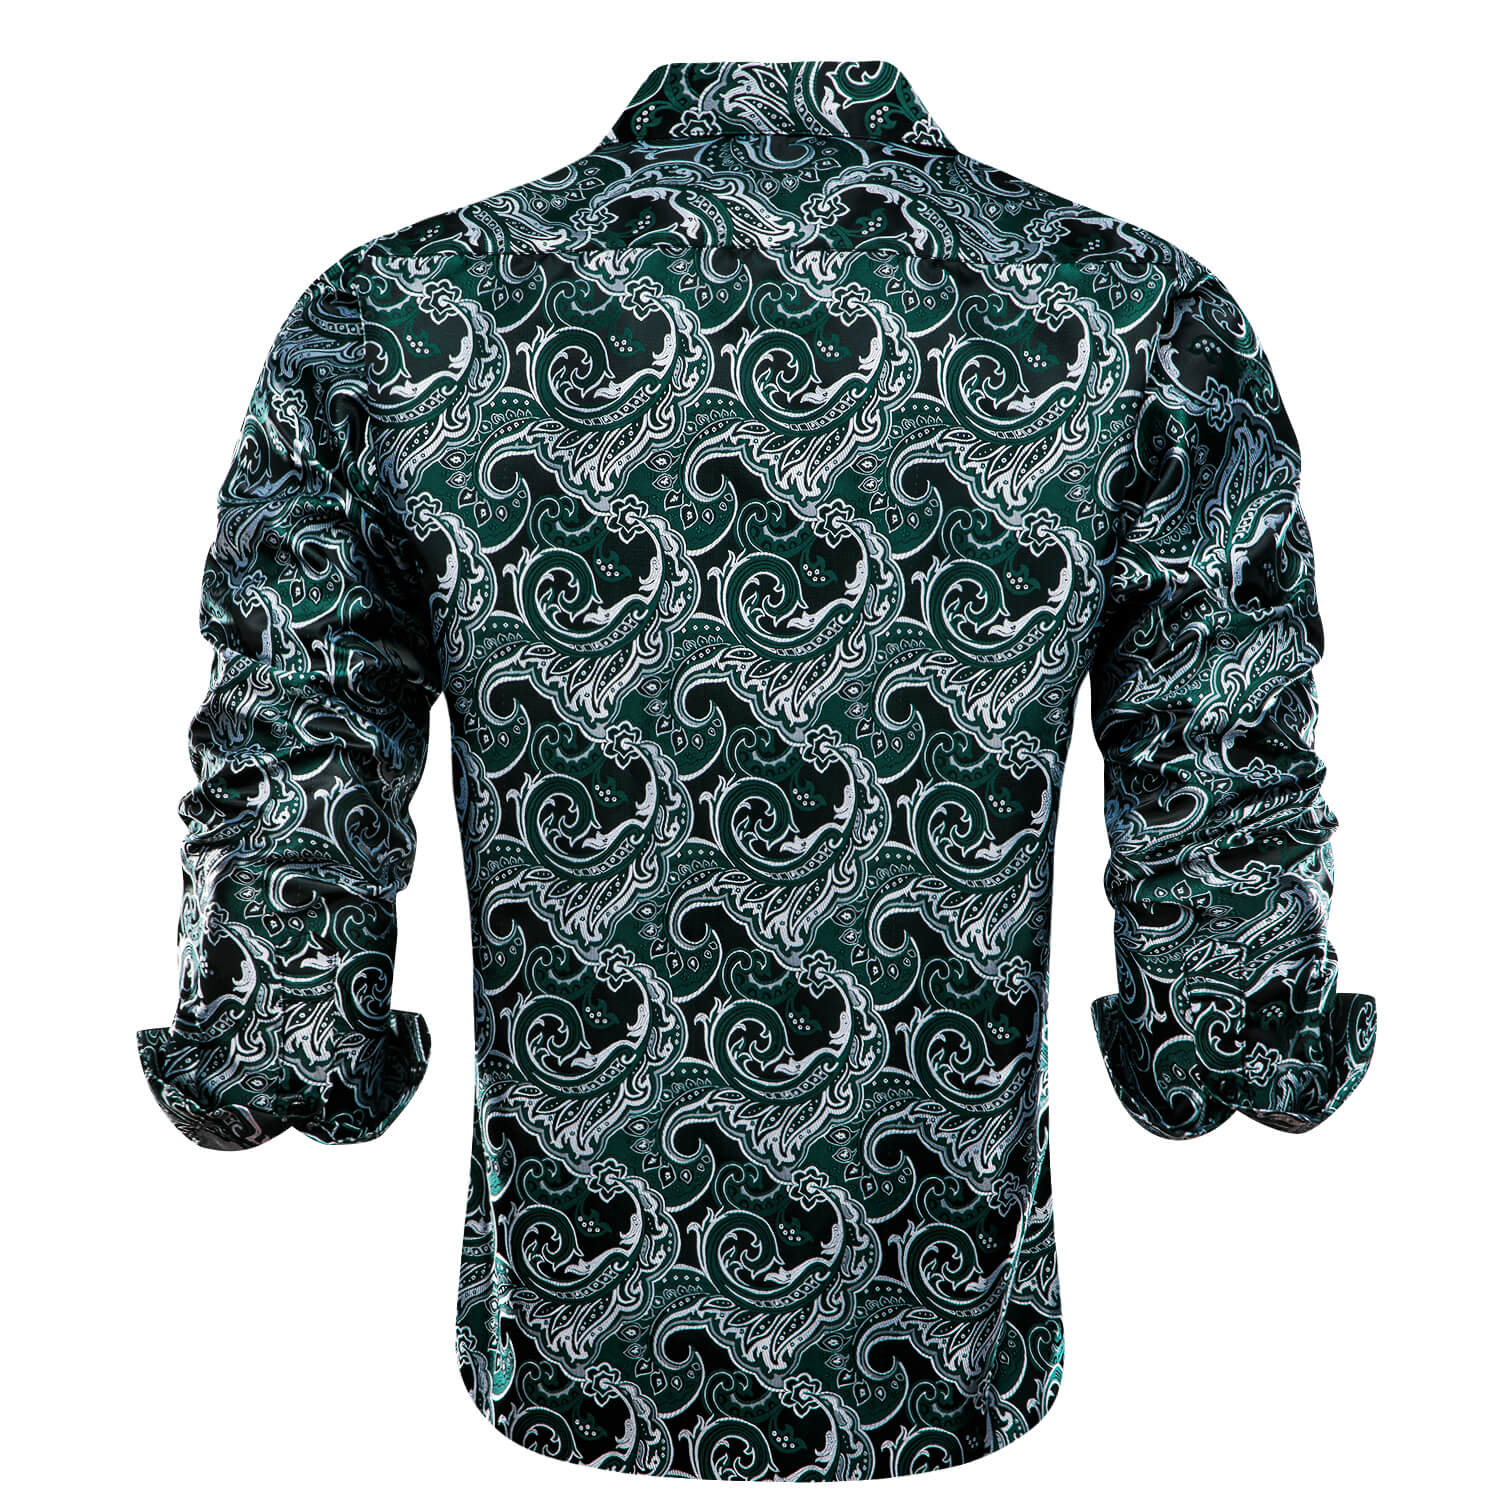 Hi-Tie Long Sleeve Shirt Sapphire Pine Green Silver Jacquard Floral Silk Shirt